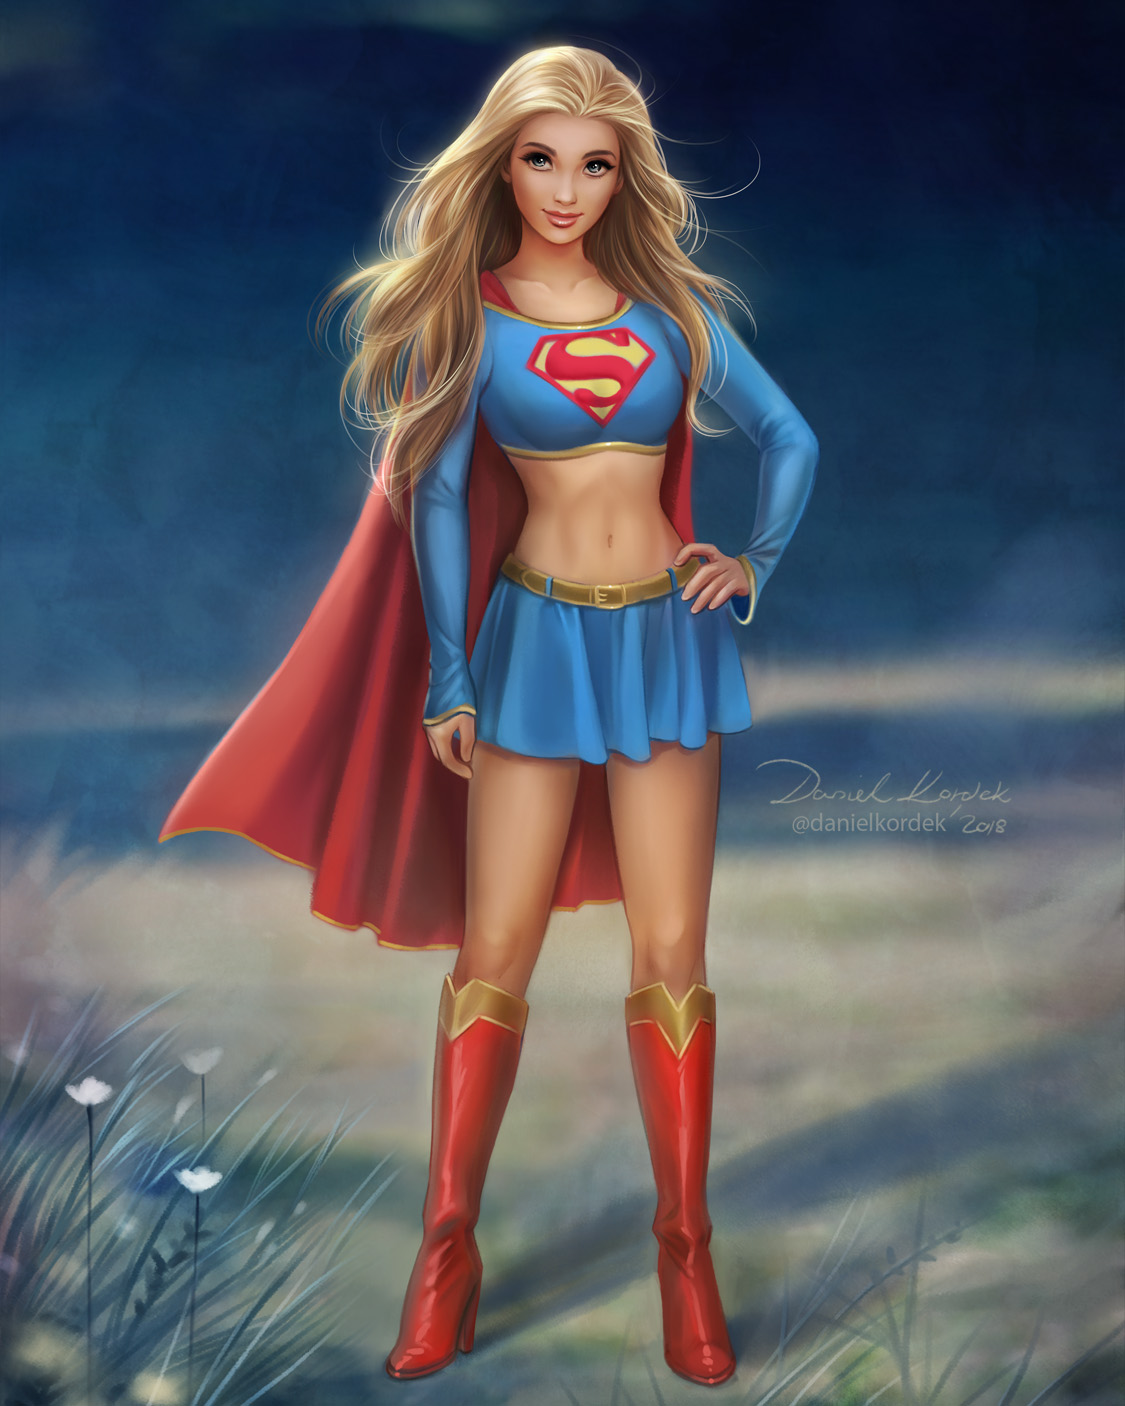 Supergirl Art - ID: 134185 - Art Abyss